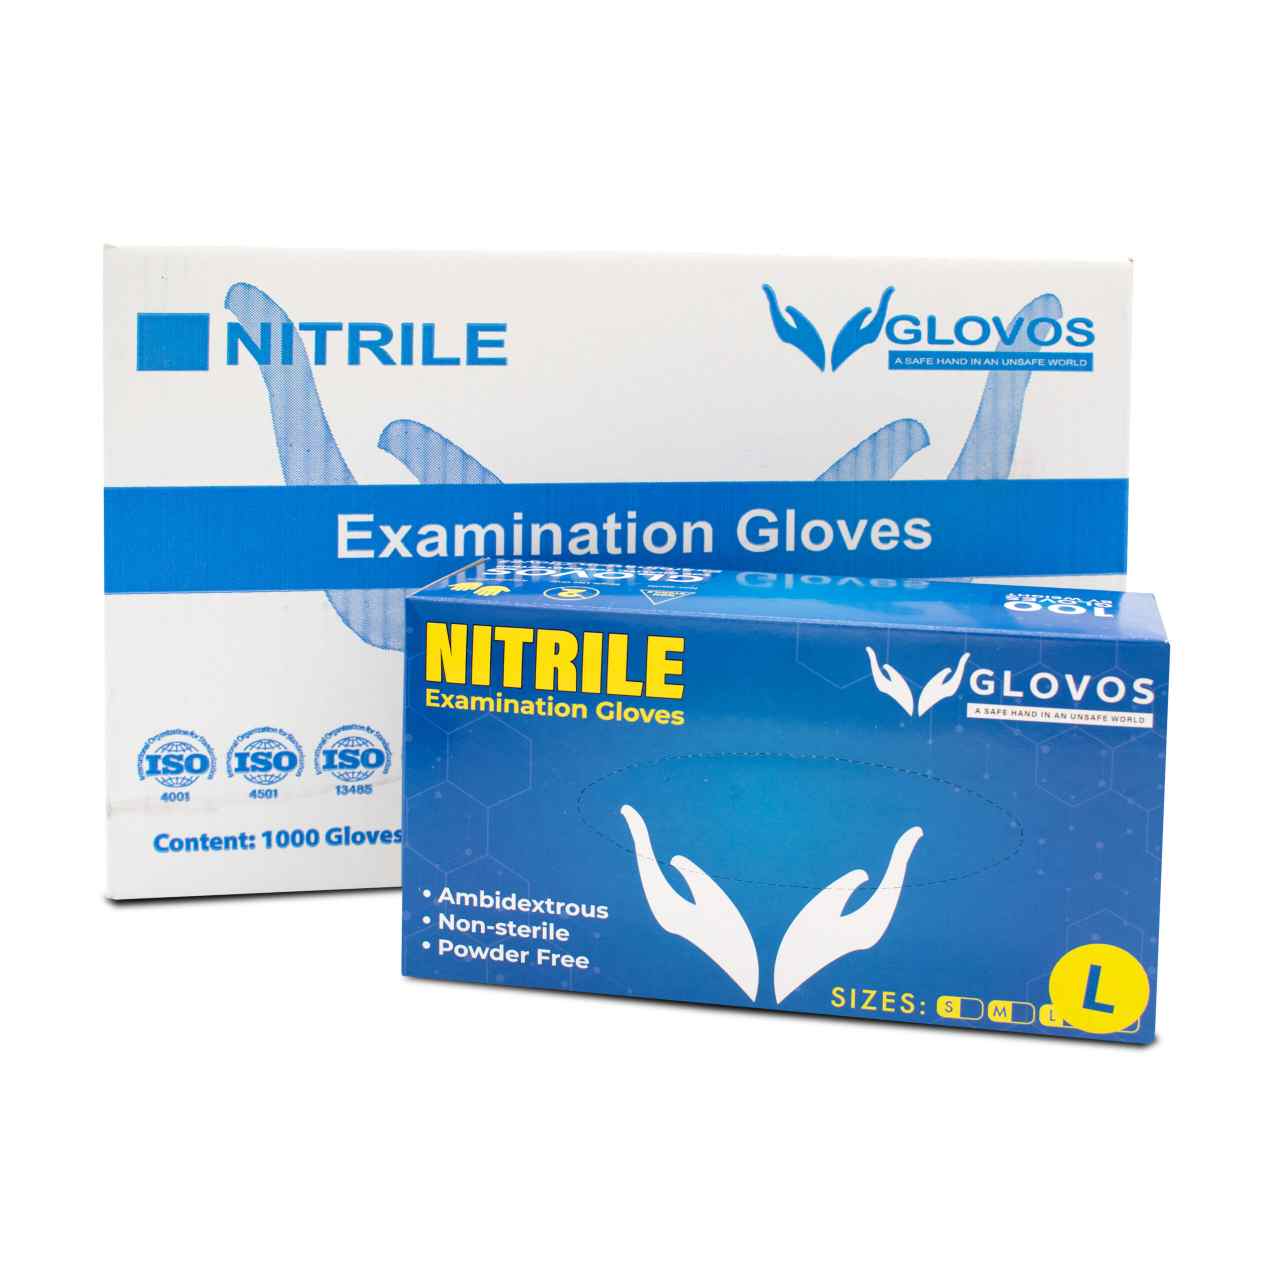 Glovos 3.5mil Nitrile Exam Gloves, Blue, 100Pcs Per Box - Seelingo.com ...